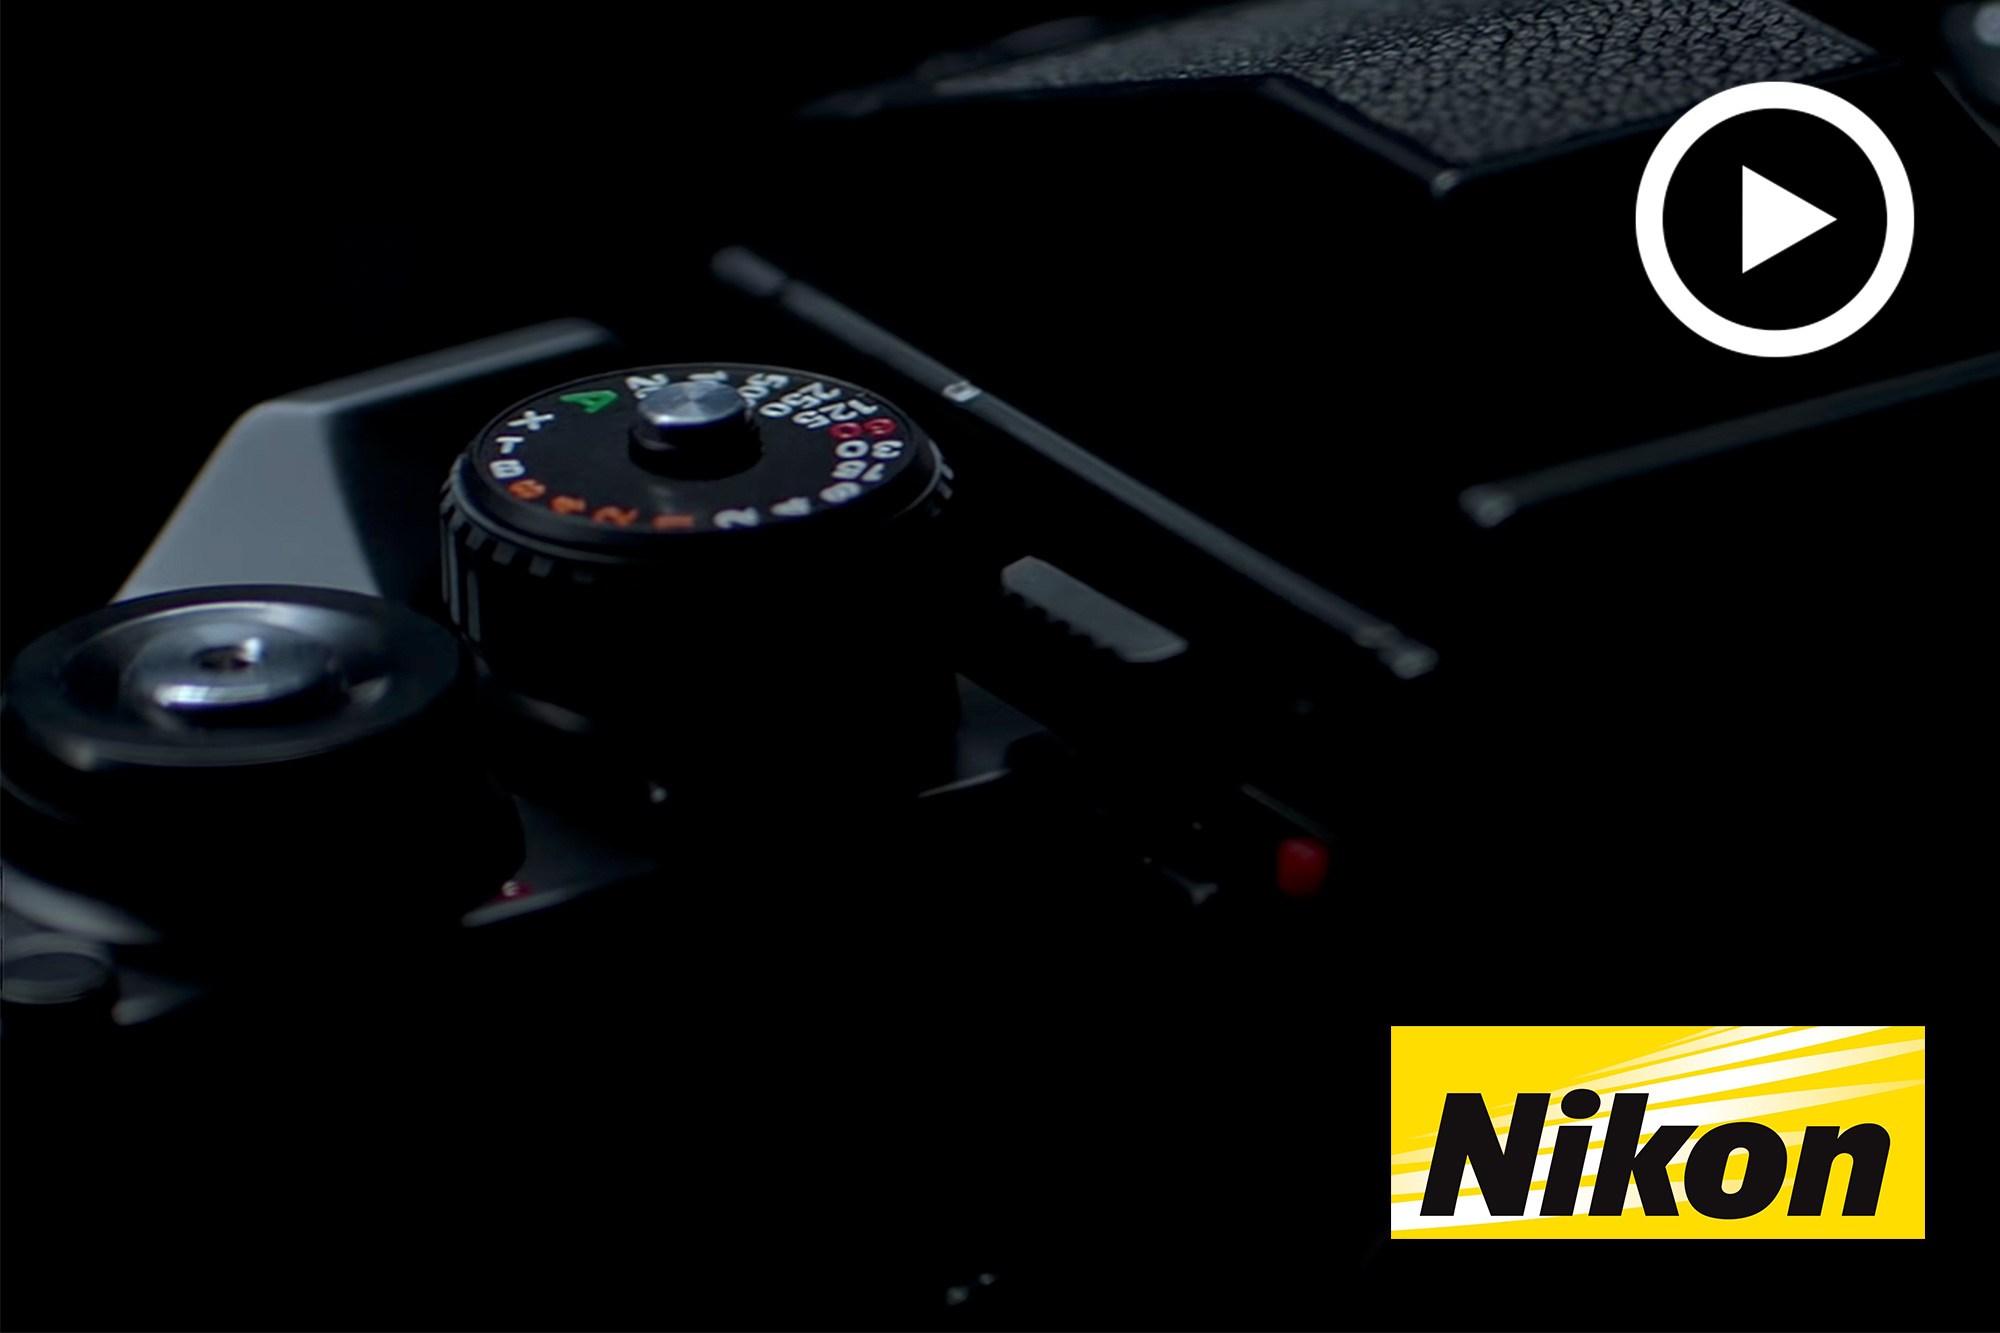 New Nikon Mirrorless Body Details Revealed | The Design Looks Familiar